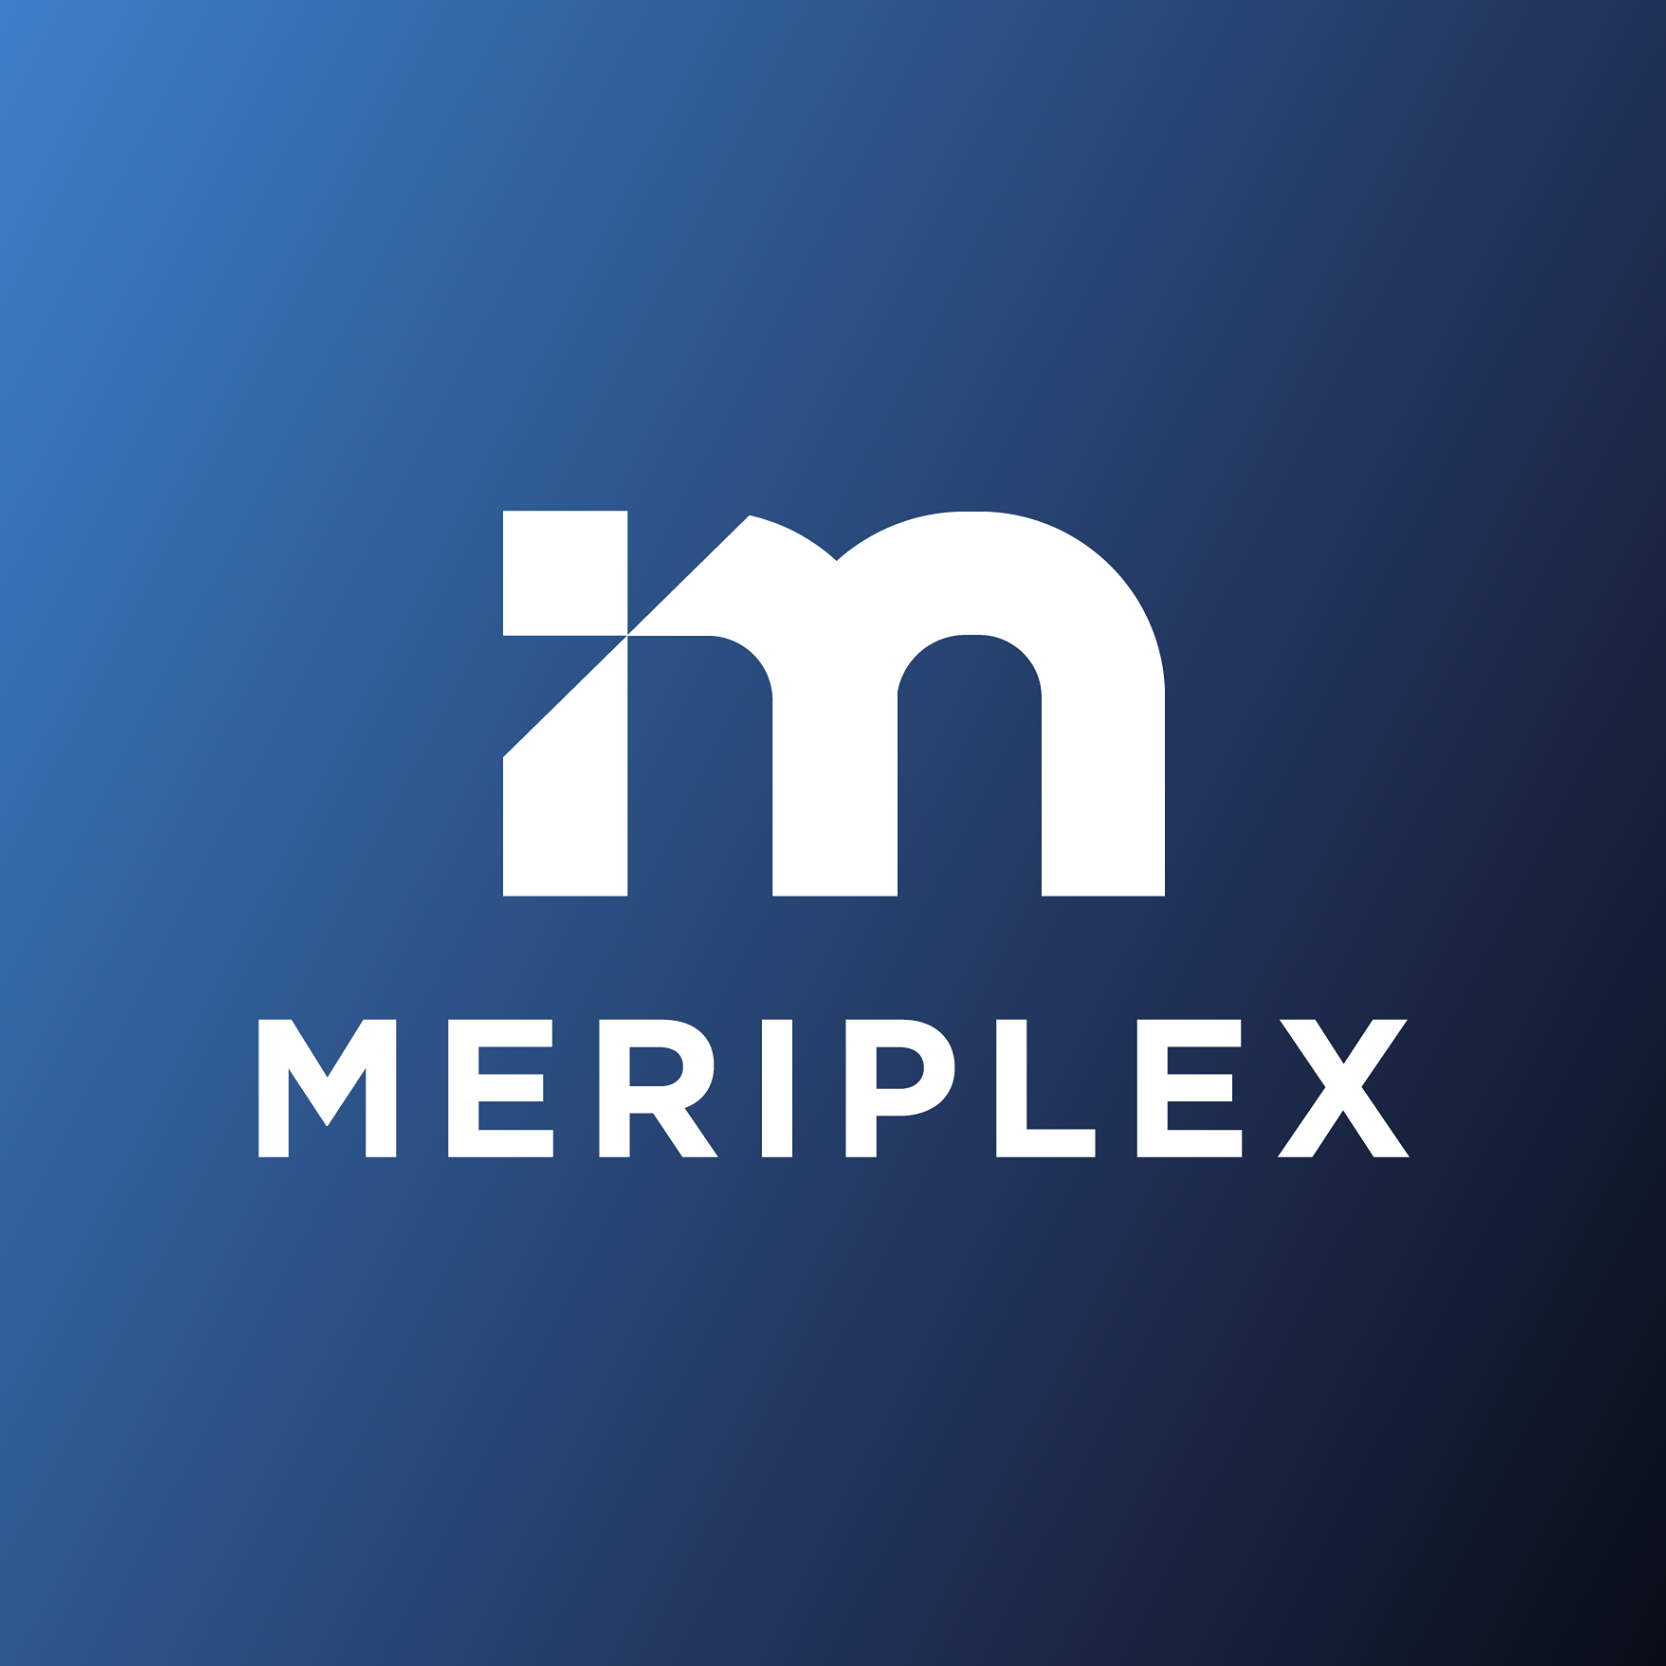 Meriplex msp managed service provider